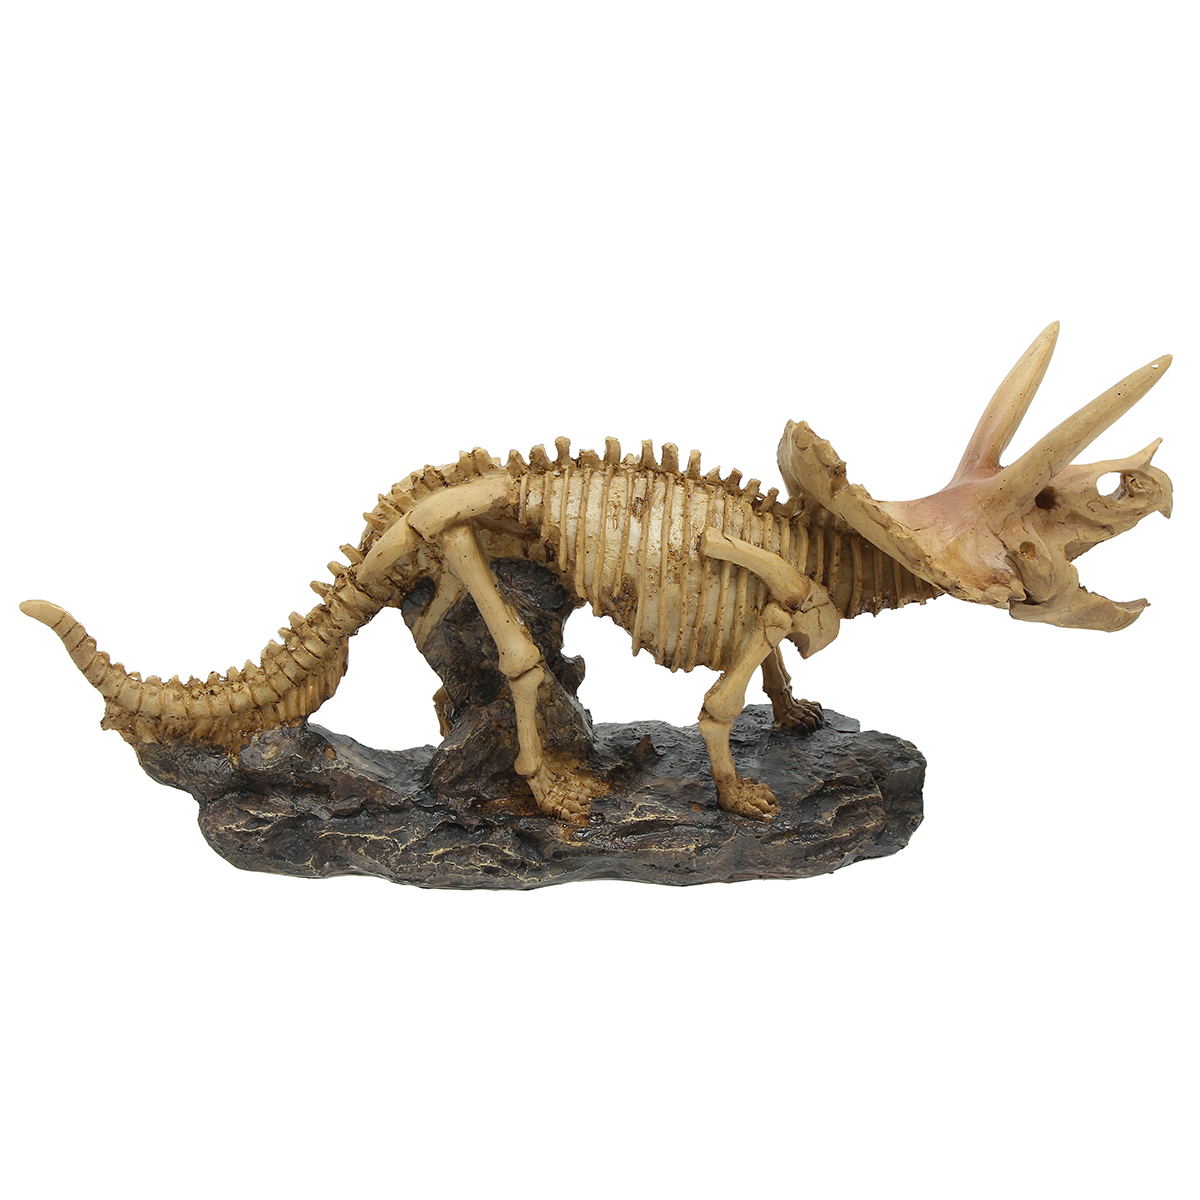 

Large Resin Dinosaur Skeleton Fossil Model Sculpture Figure Stand Display Decorations